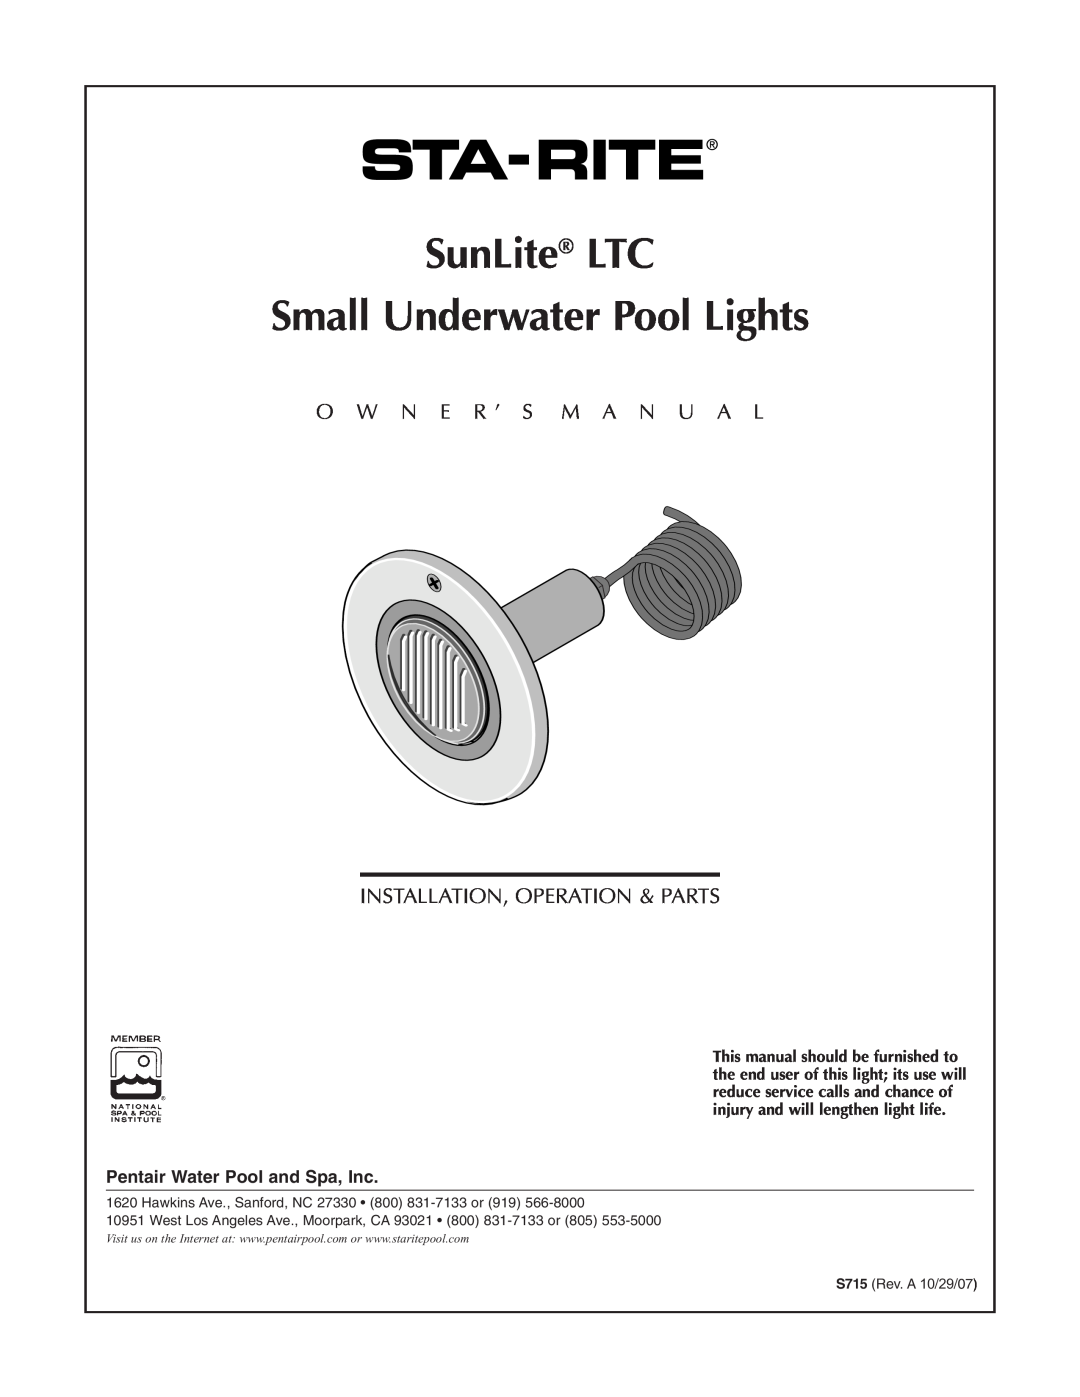 Pentair owner manual SunLite LTC Small Underwater Pool Lights, O W N E R ’ S M A N U A L 